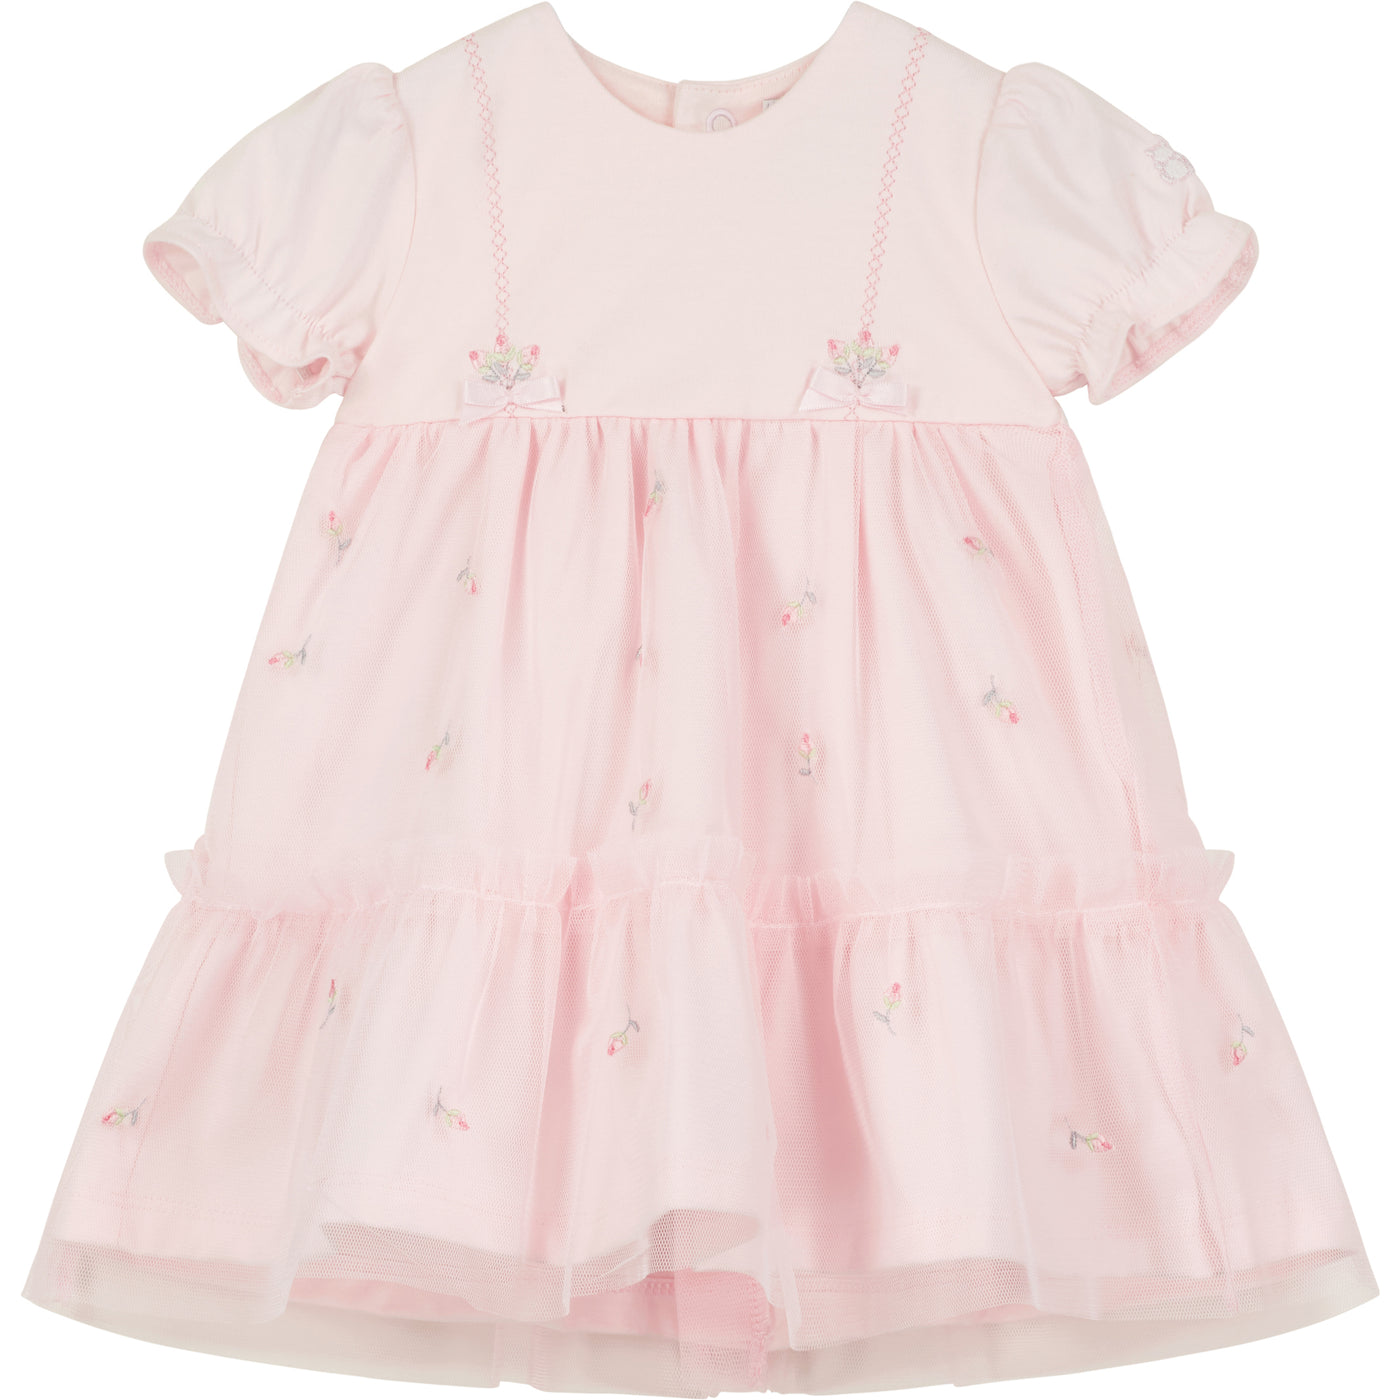 Fabienne Tulle Overlay Baby Girls Dress